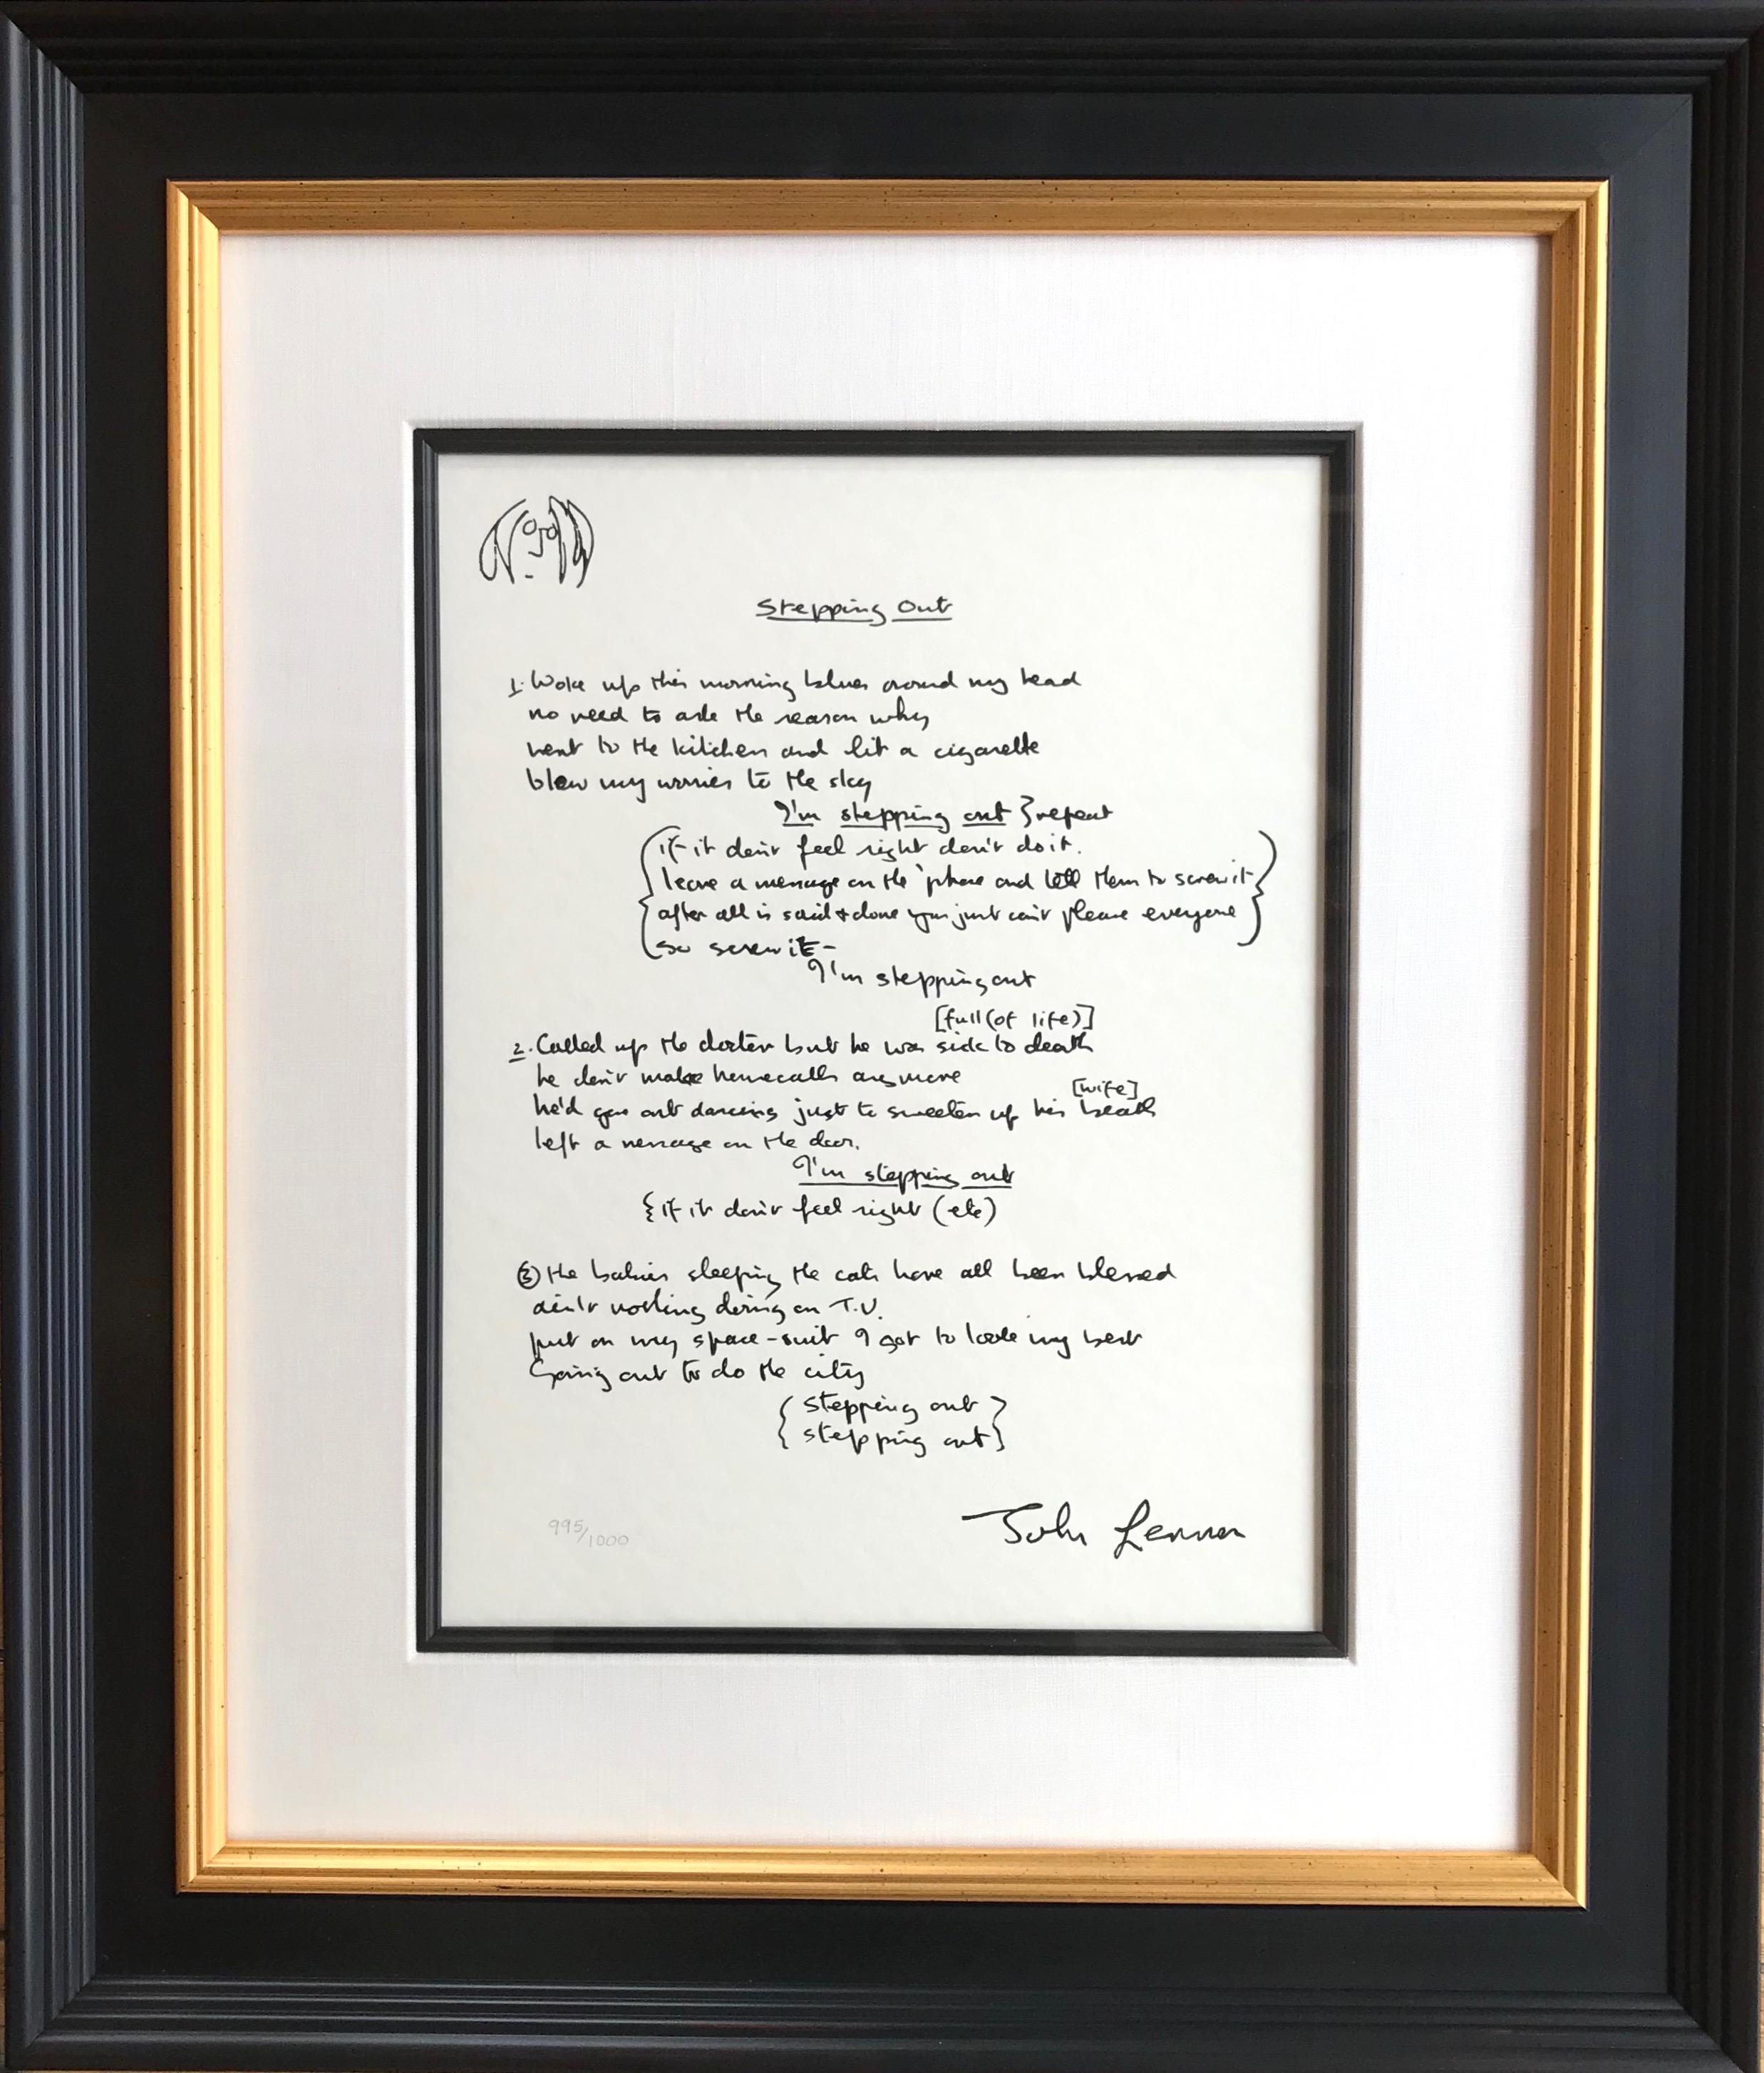 John Lennon Print - "Stepping Out" Limited Edition Hand Written Lyrics